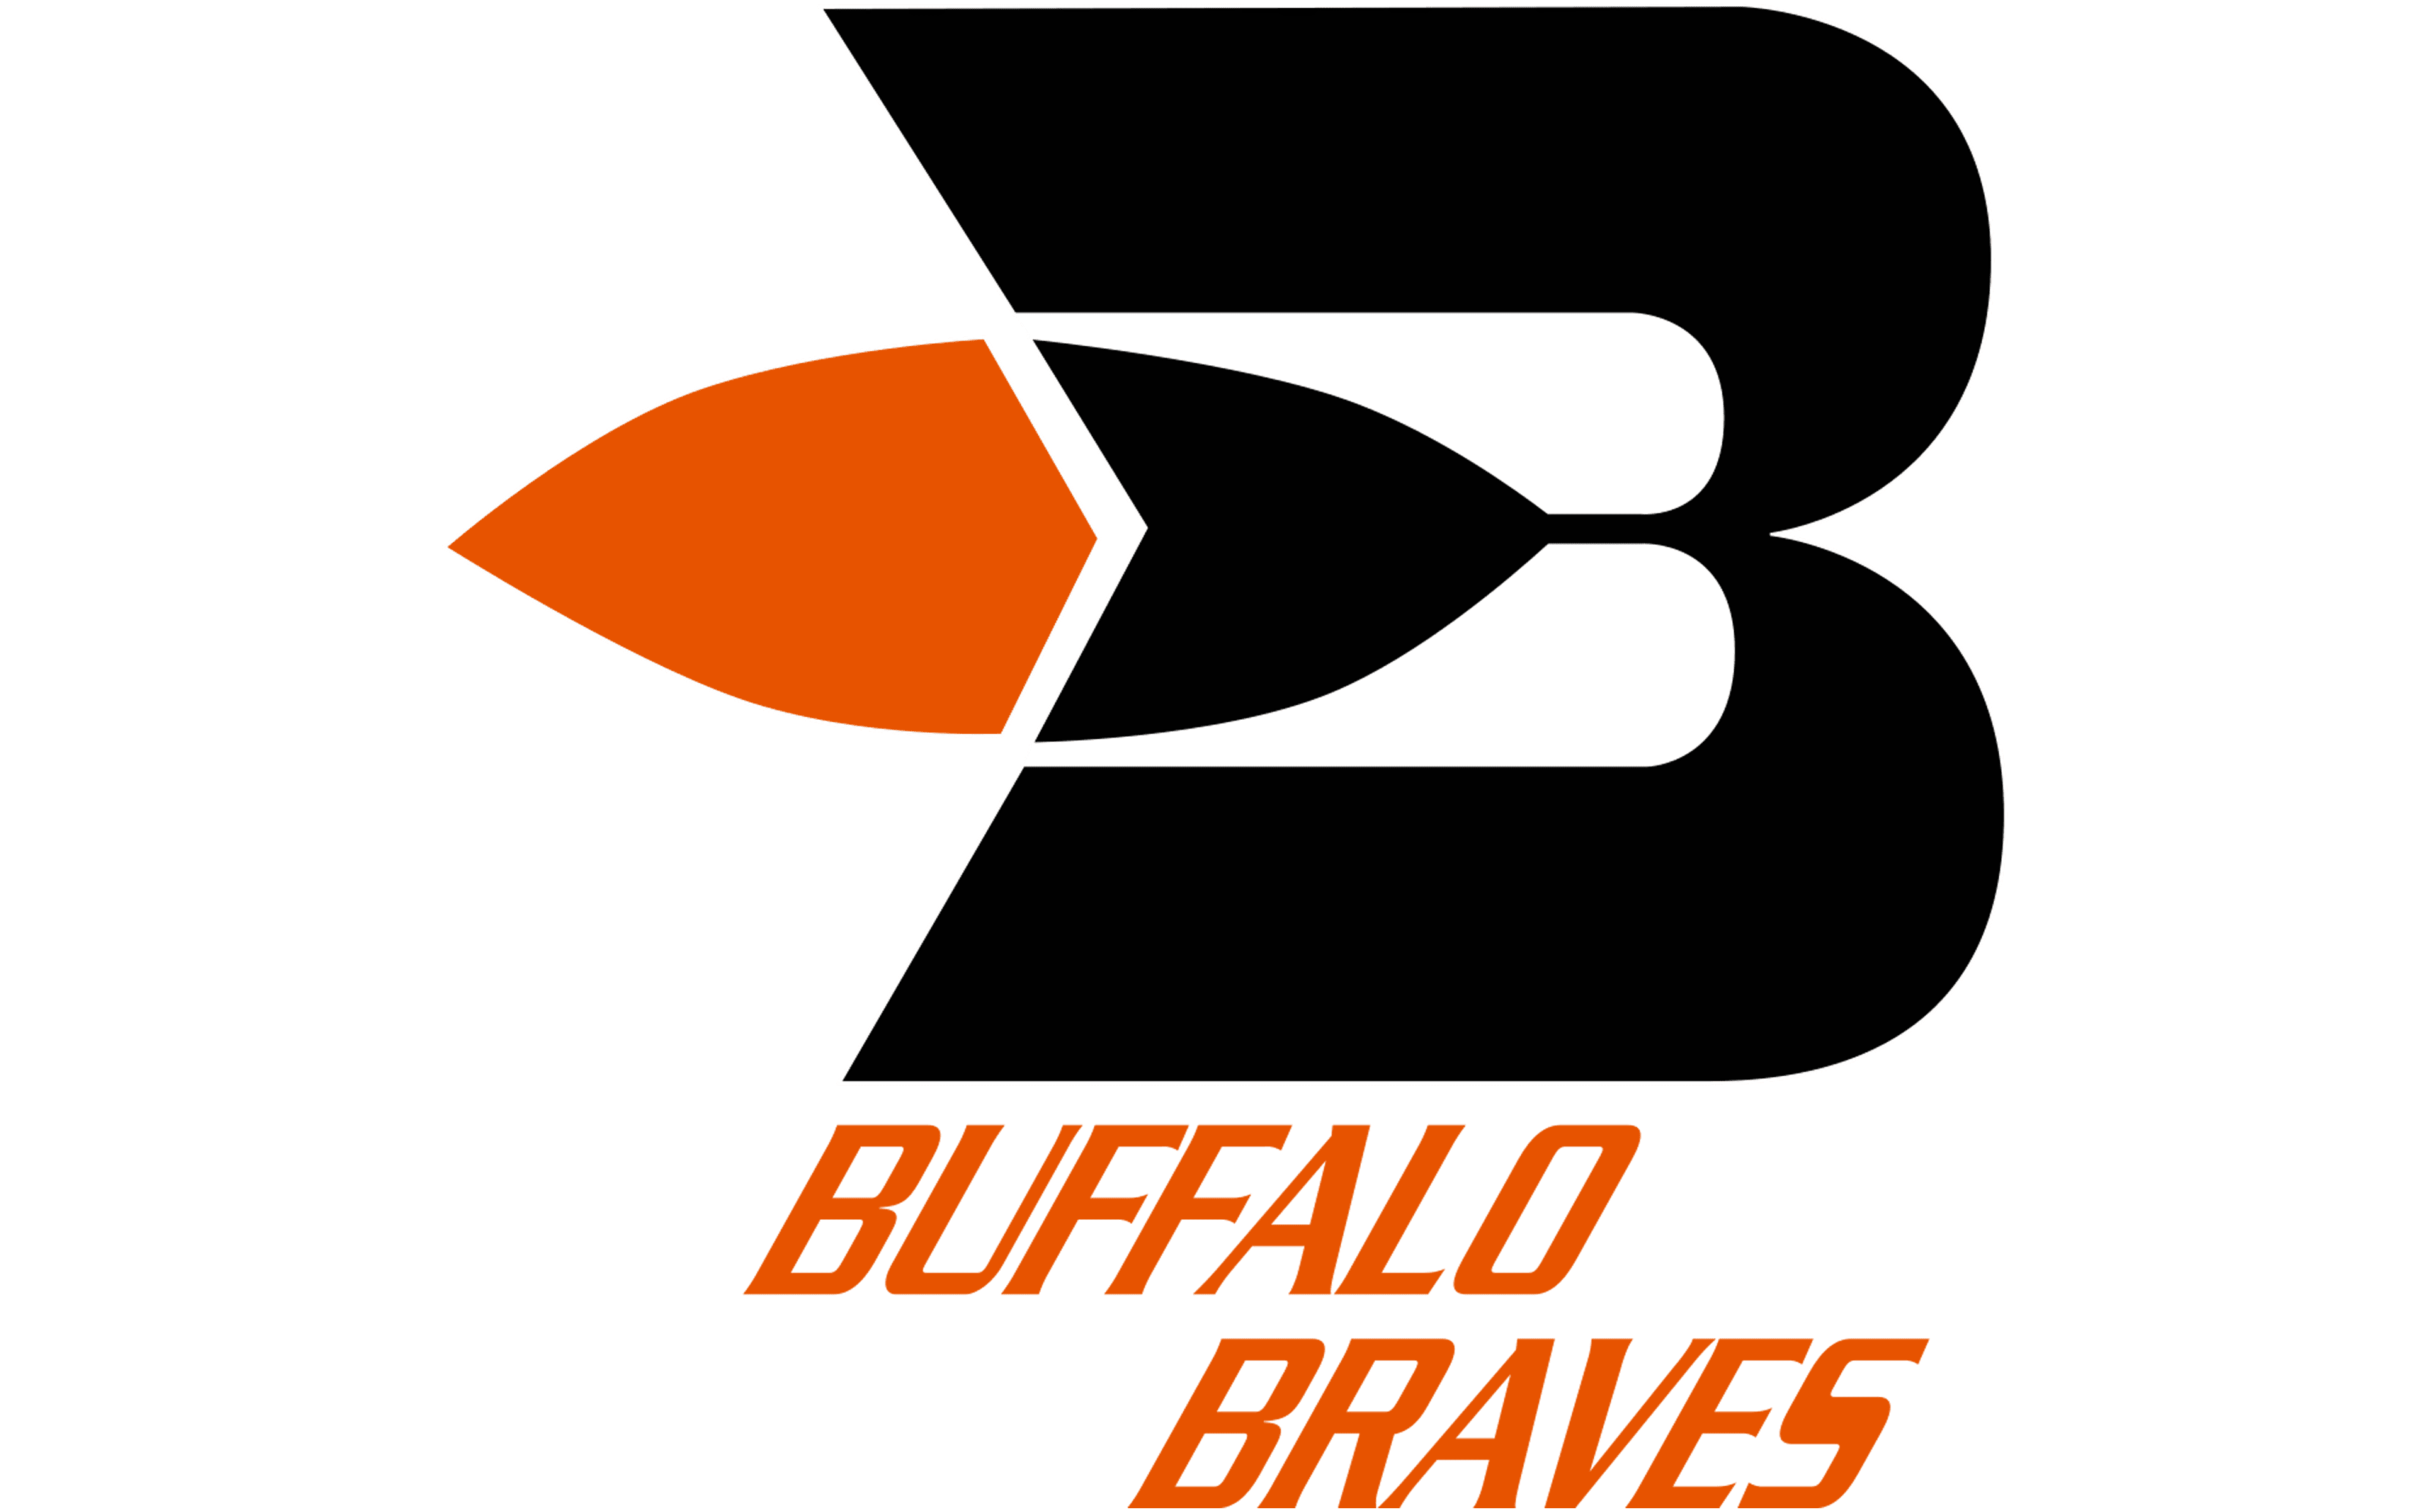 braves logo png